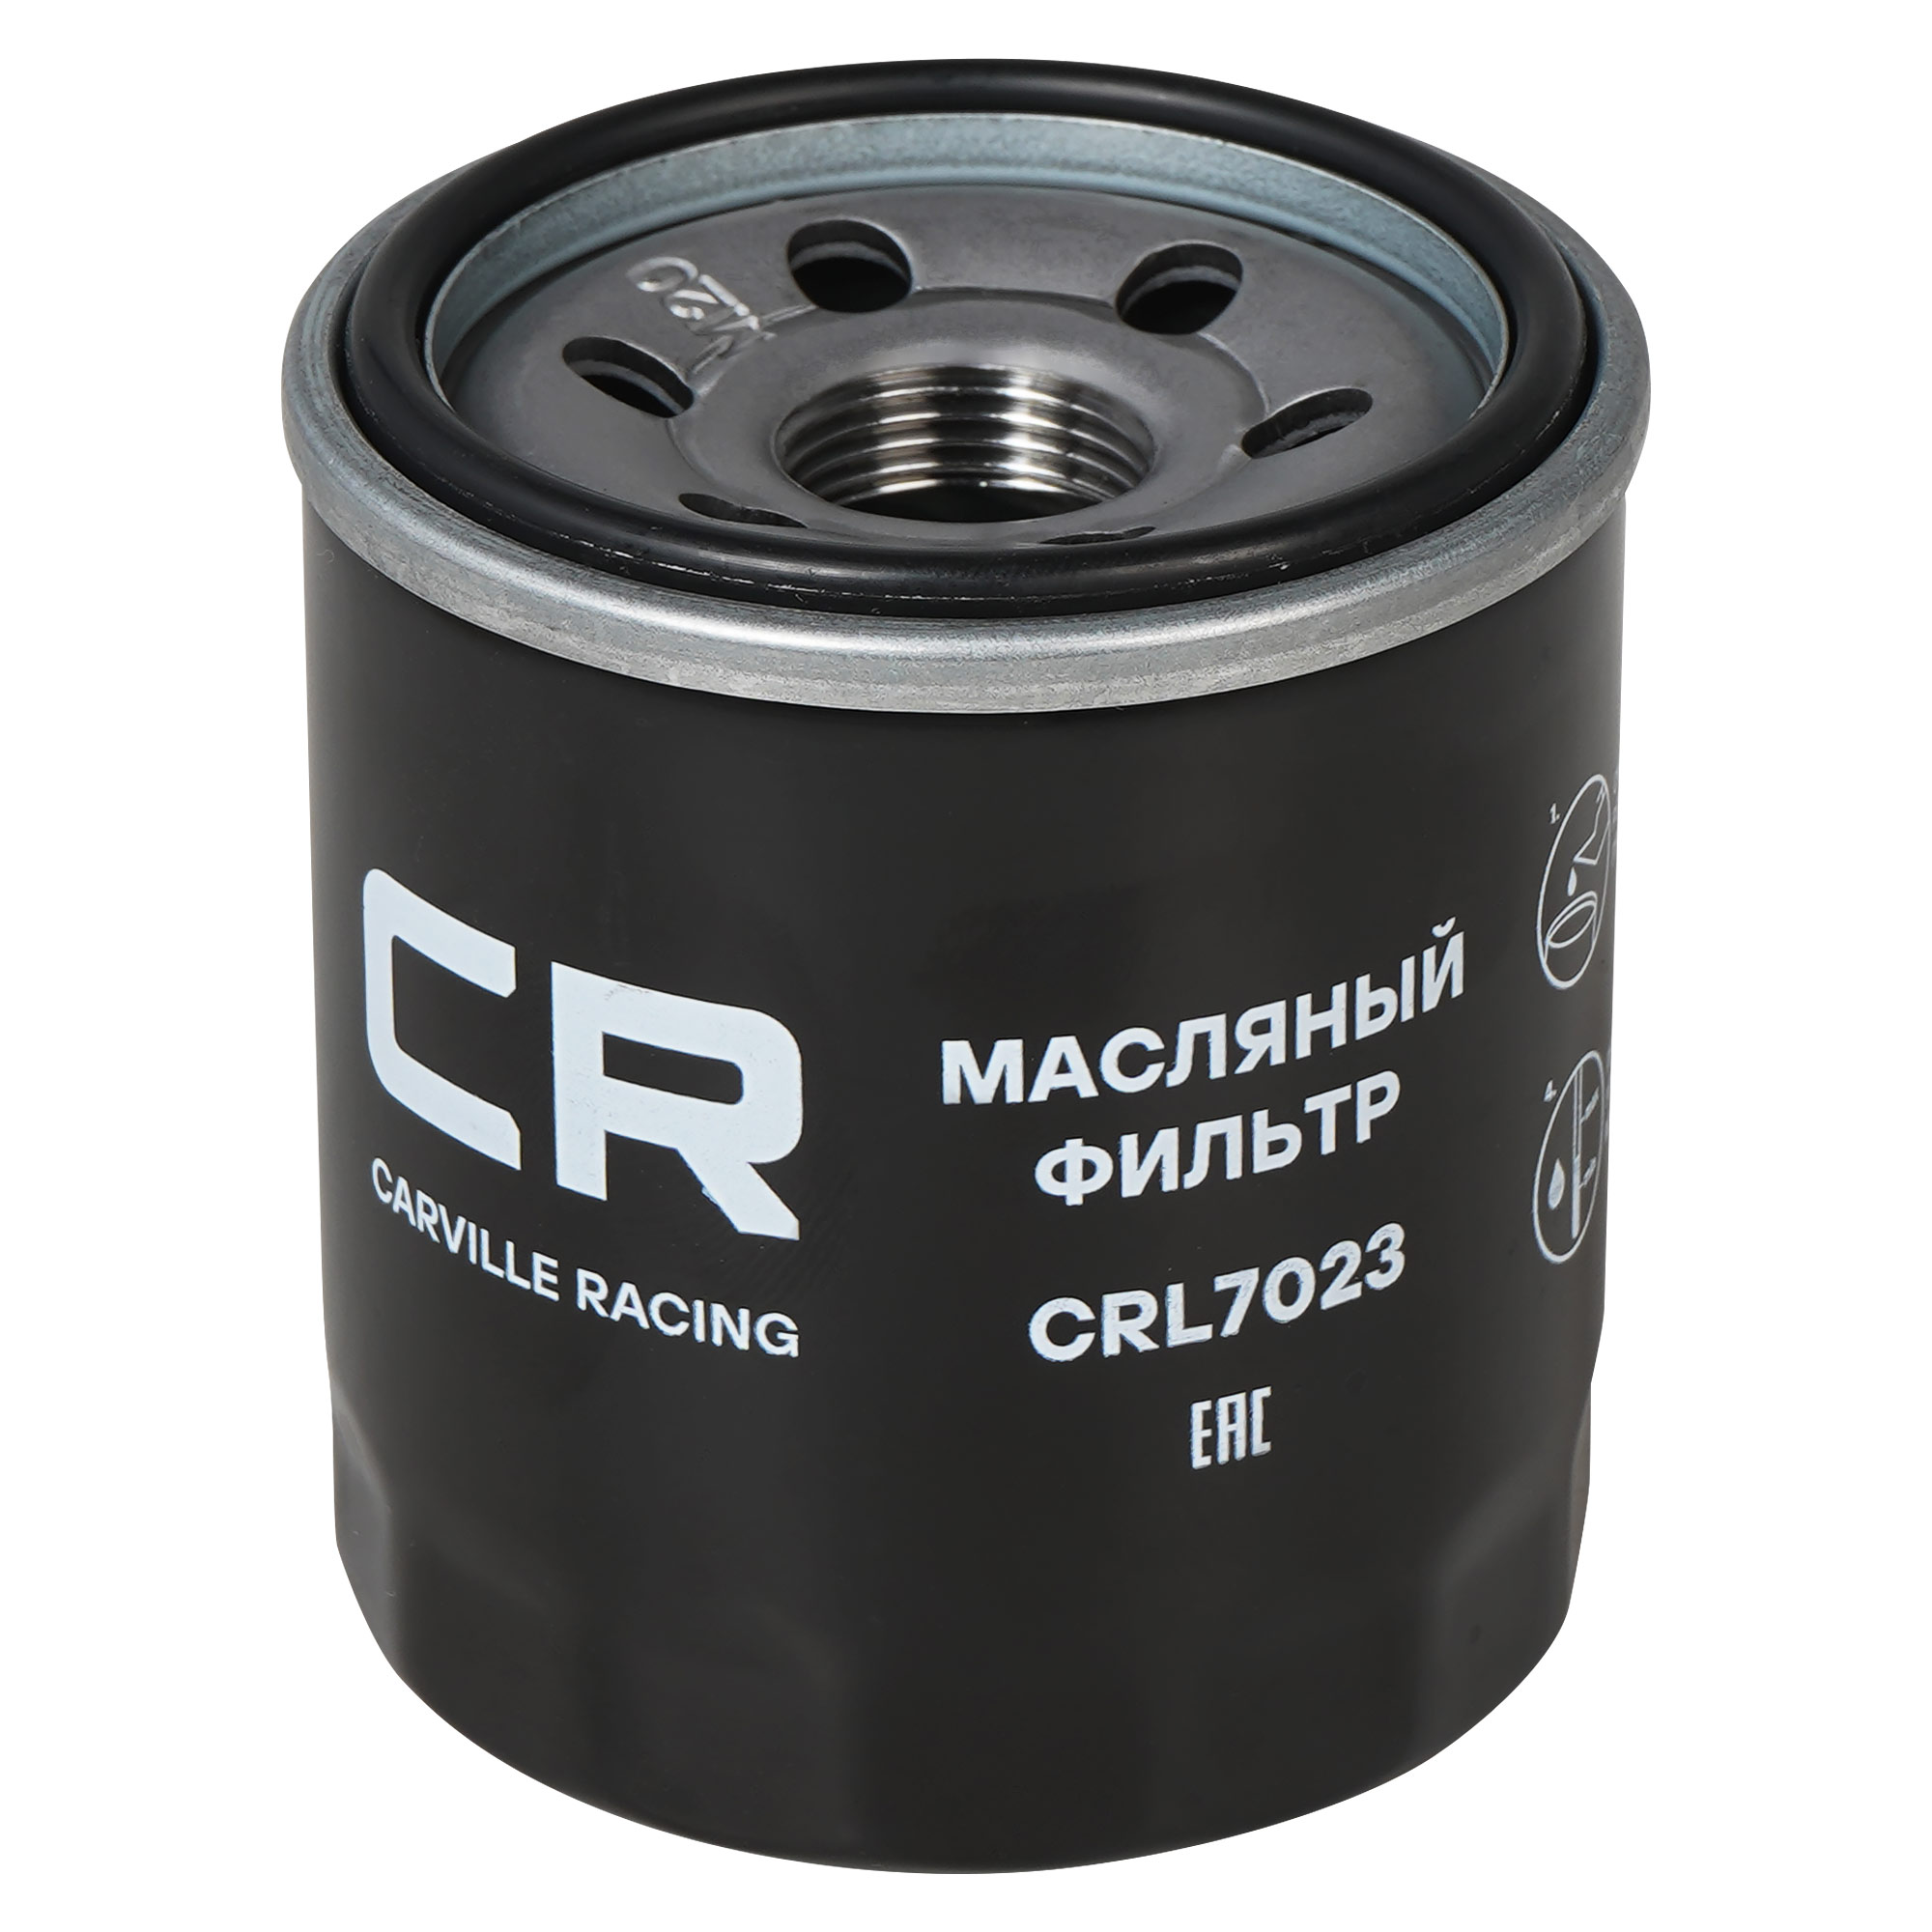 CARVILLE RACING CRL7023 Фильтр для а/м kia rio (17 )/hyundai solaris (17 ) 1.4i (масл.) (crl7023) купить в Самаре